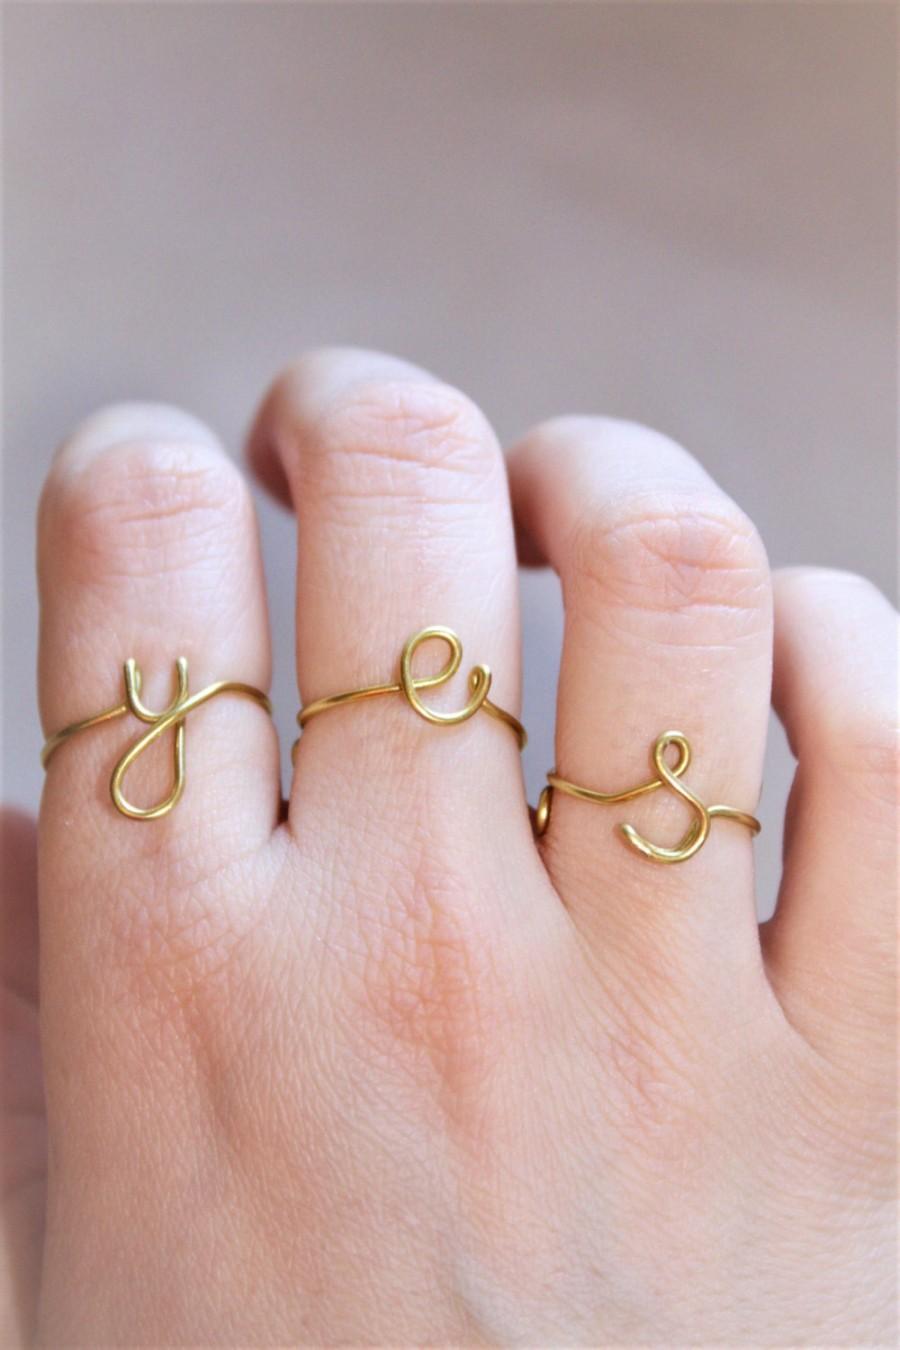 Wedding - Lowercase Gold Initial Ring, Personalized Gifts, Personalized Initial Ring, Gold Name Ring, Rose Gold Initial, Silver Initial Ring